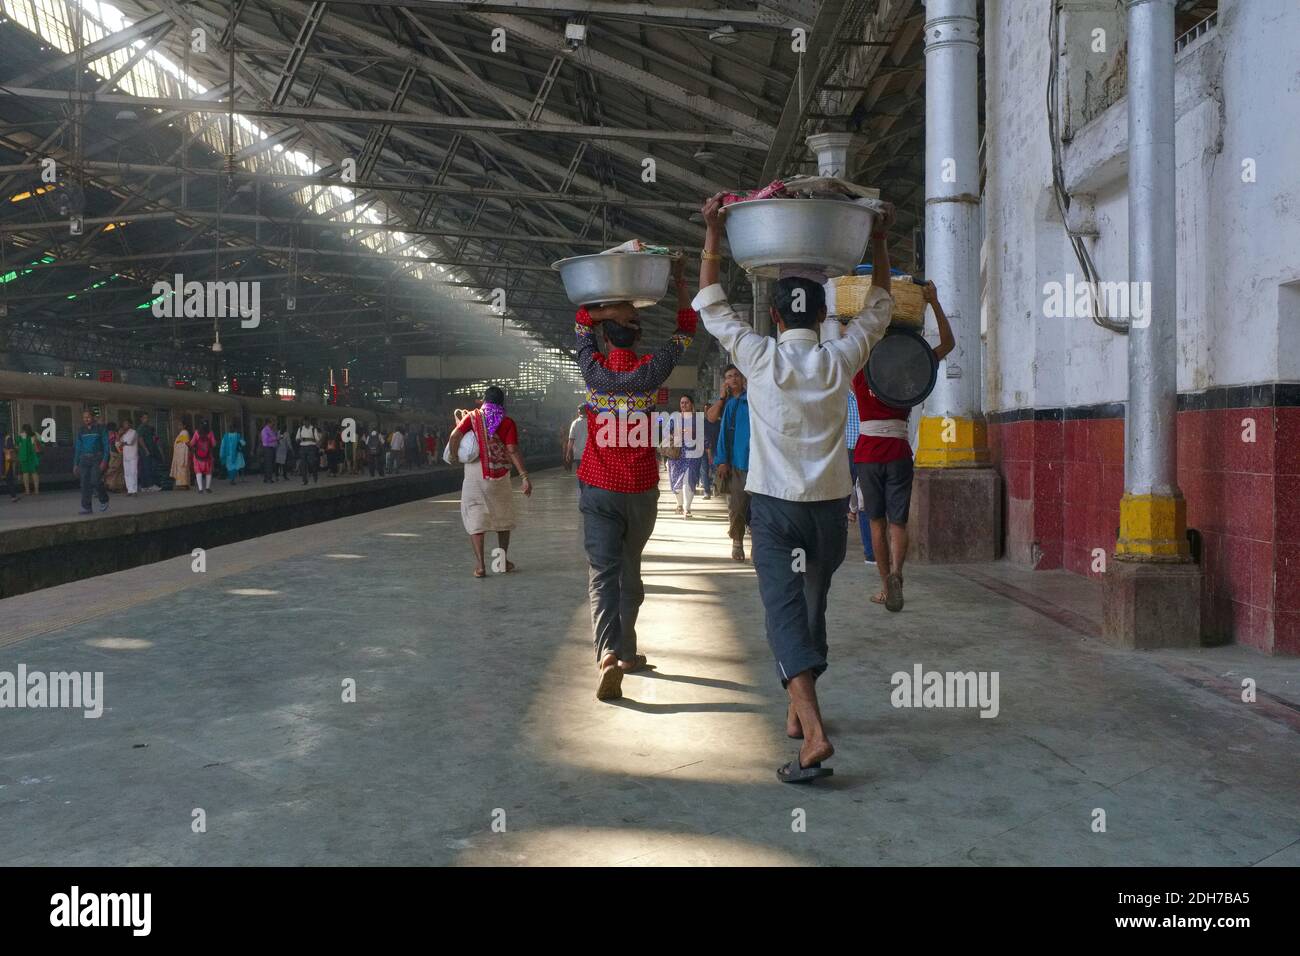 Porters carrying fish from a nearby market to load on to trains at Chhatrapati Shivaji Maharaj Terminus (CSMT) in Mumbai, India Stock Photo